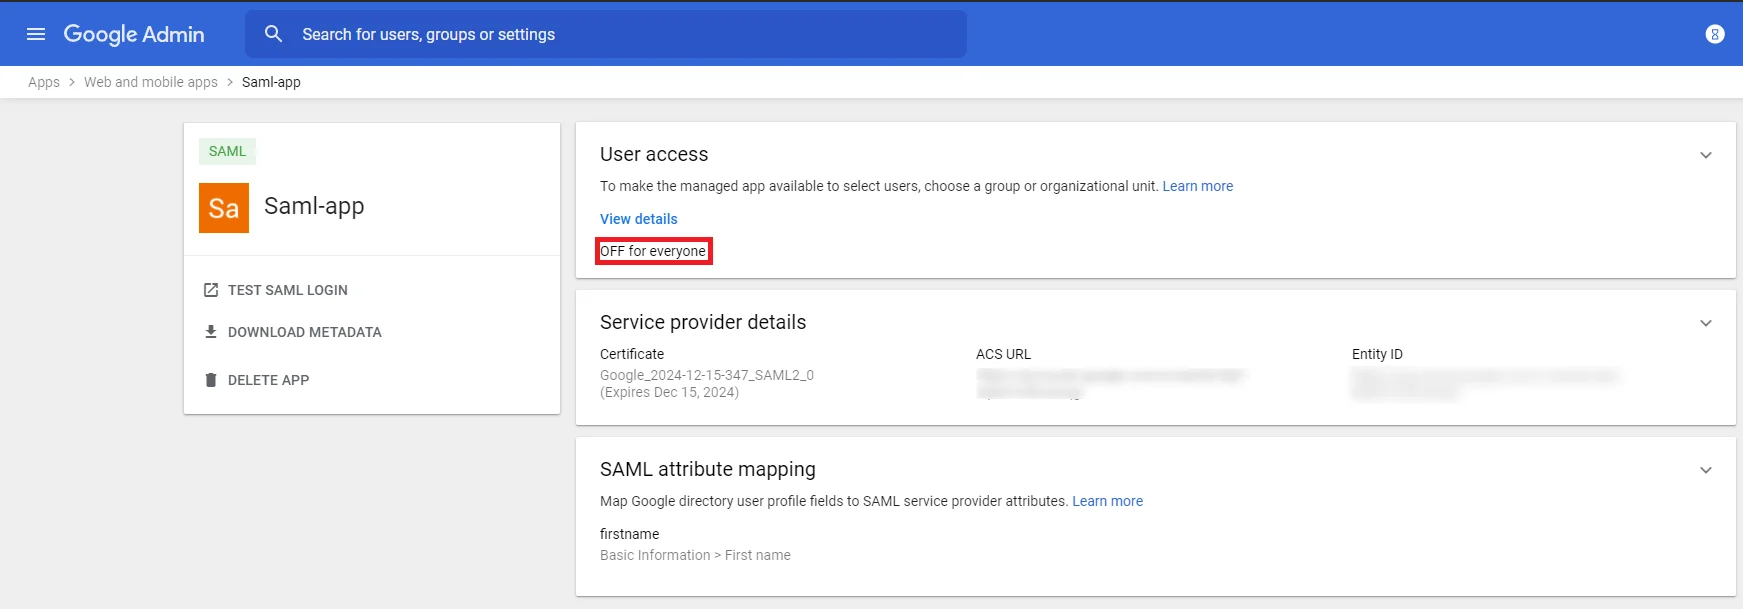 asp.net saml sso using Google Apps as an idp, Turn-off go to SAML Apps